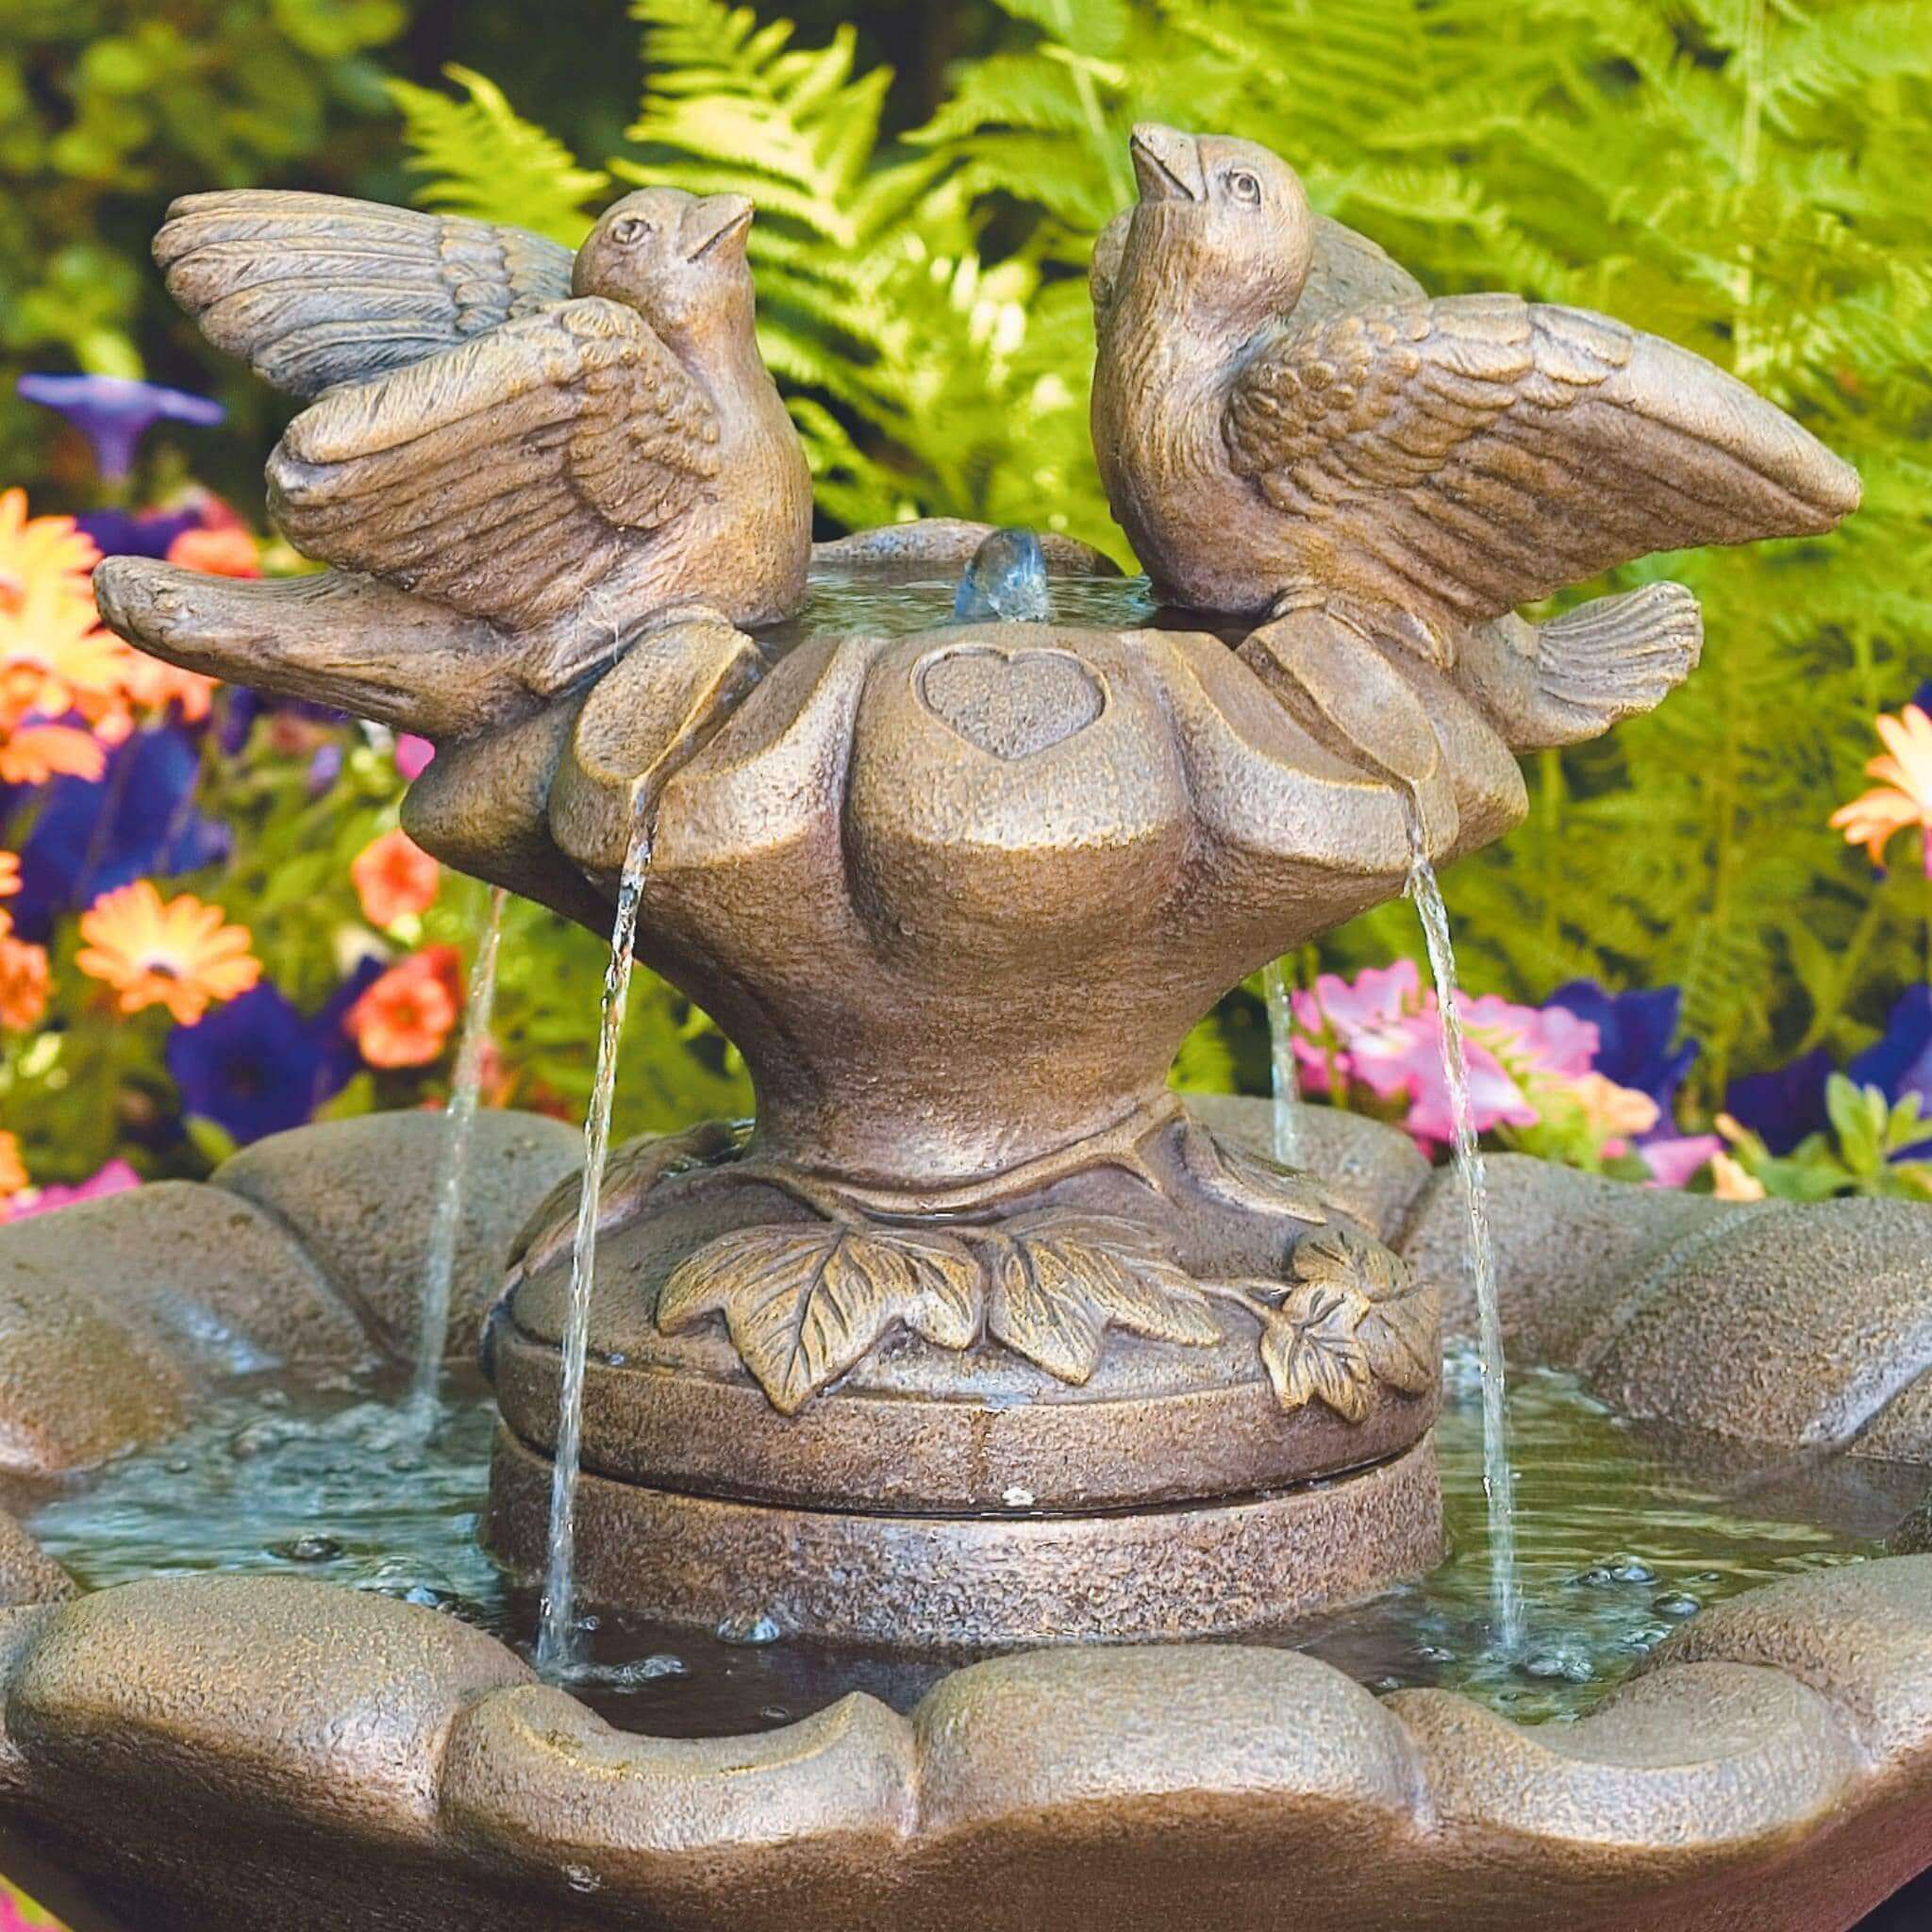 Doves of Love on Flower Shell Concrete Fountain - Massarellis #3545